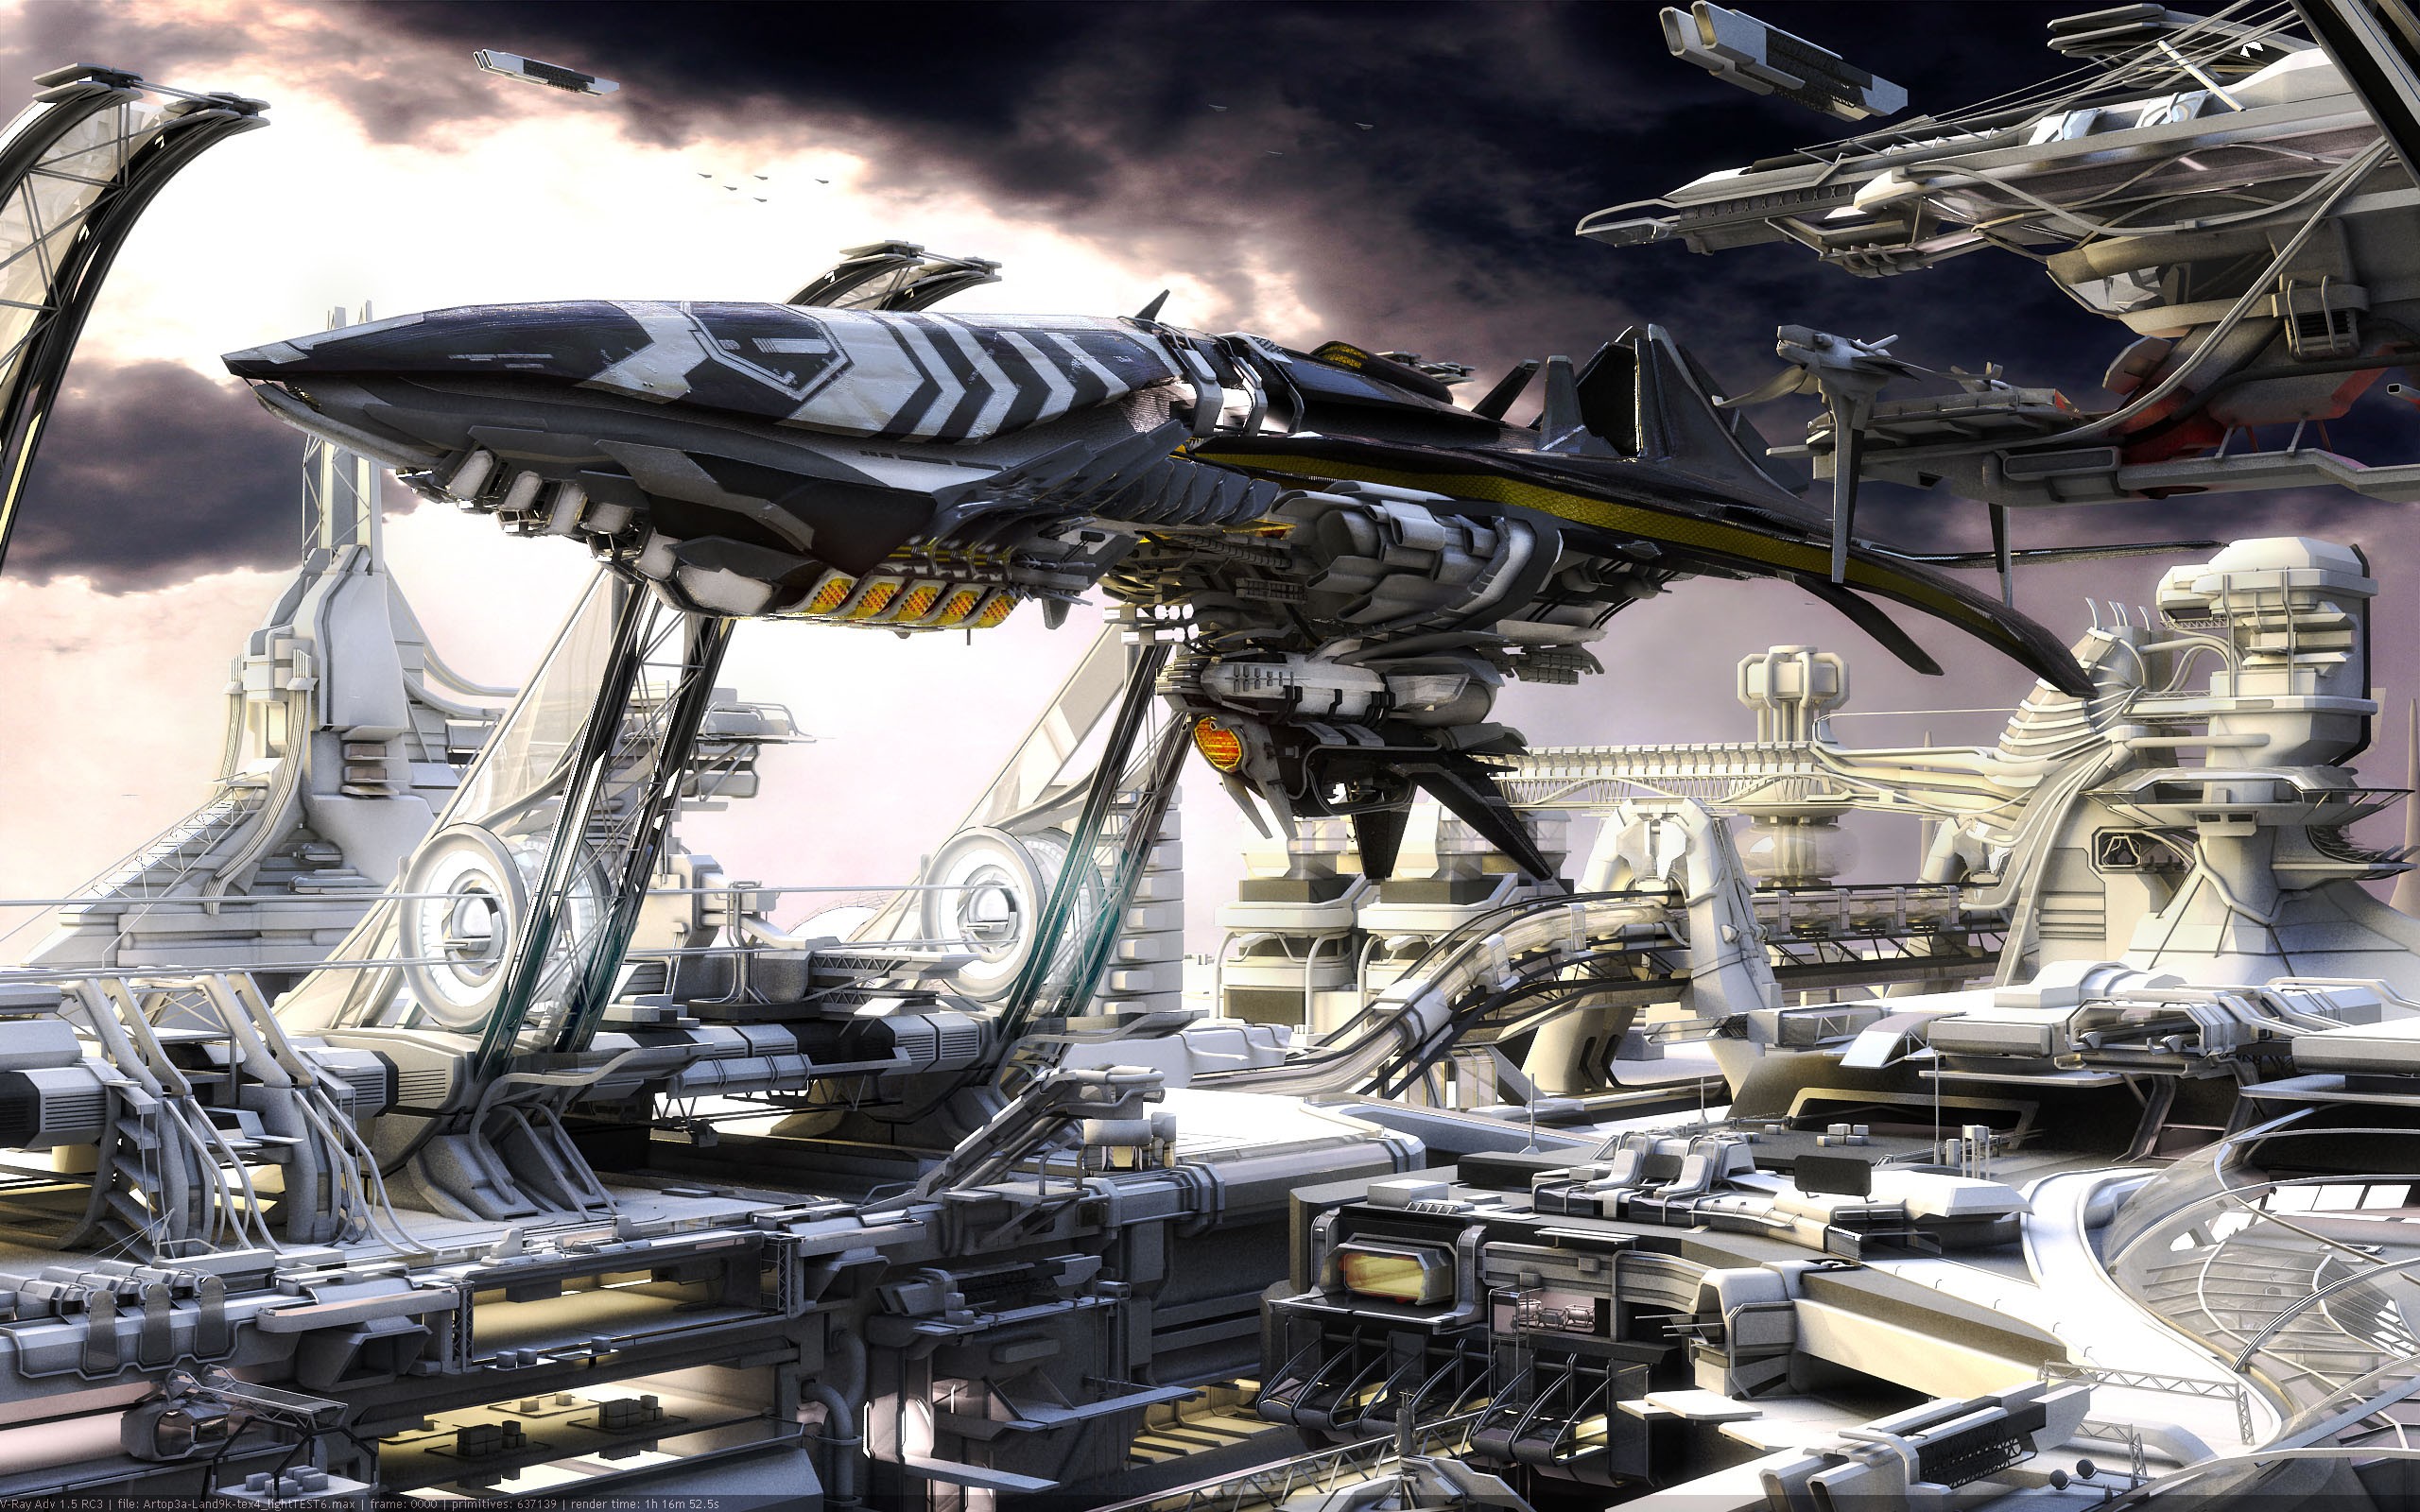 General 2560x1600 science fiction spaceship digital art futuristic vehicle